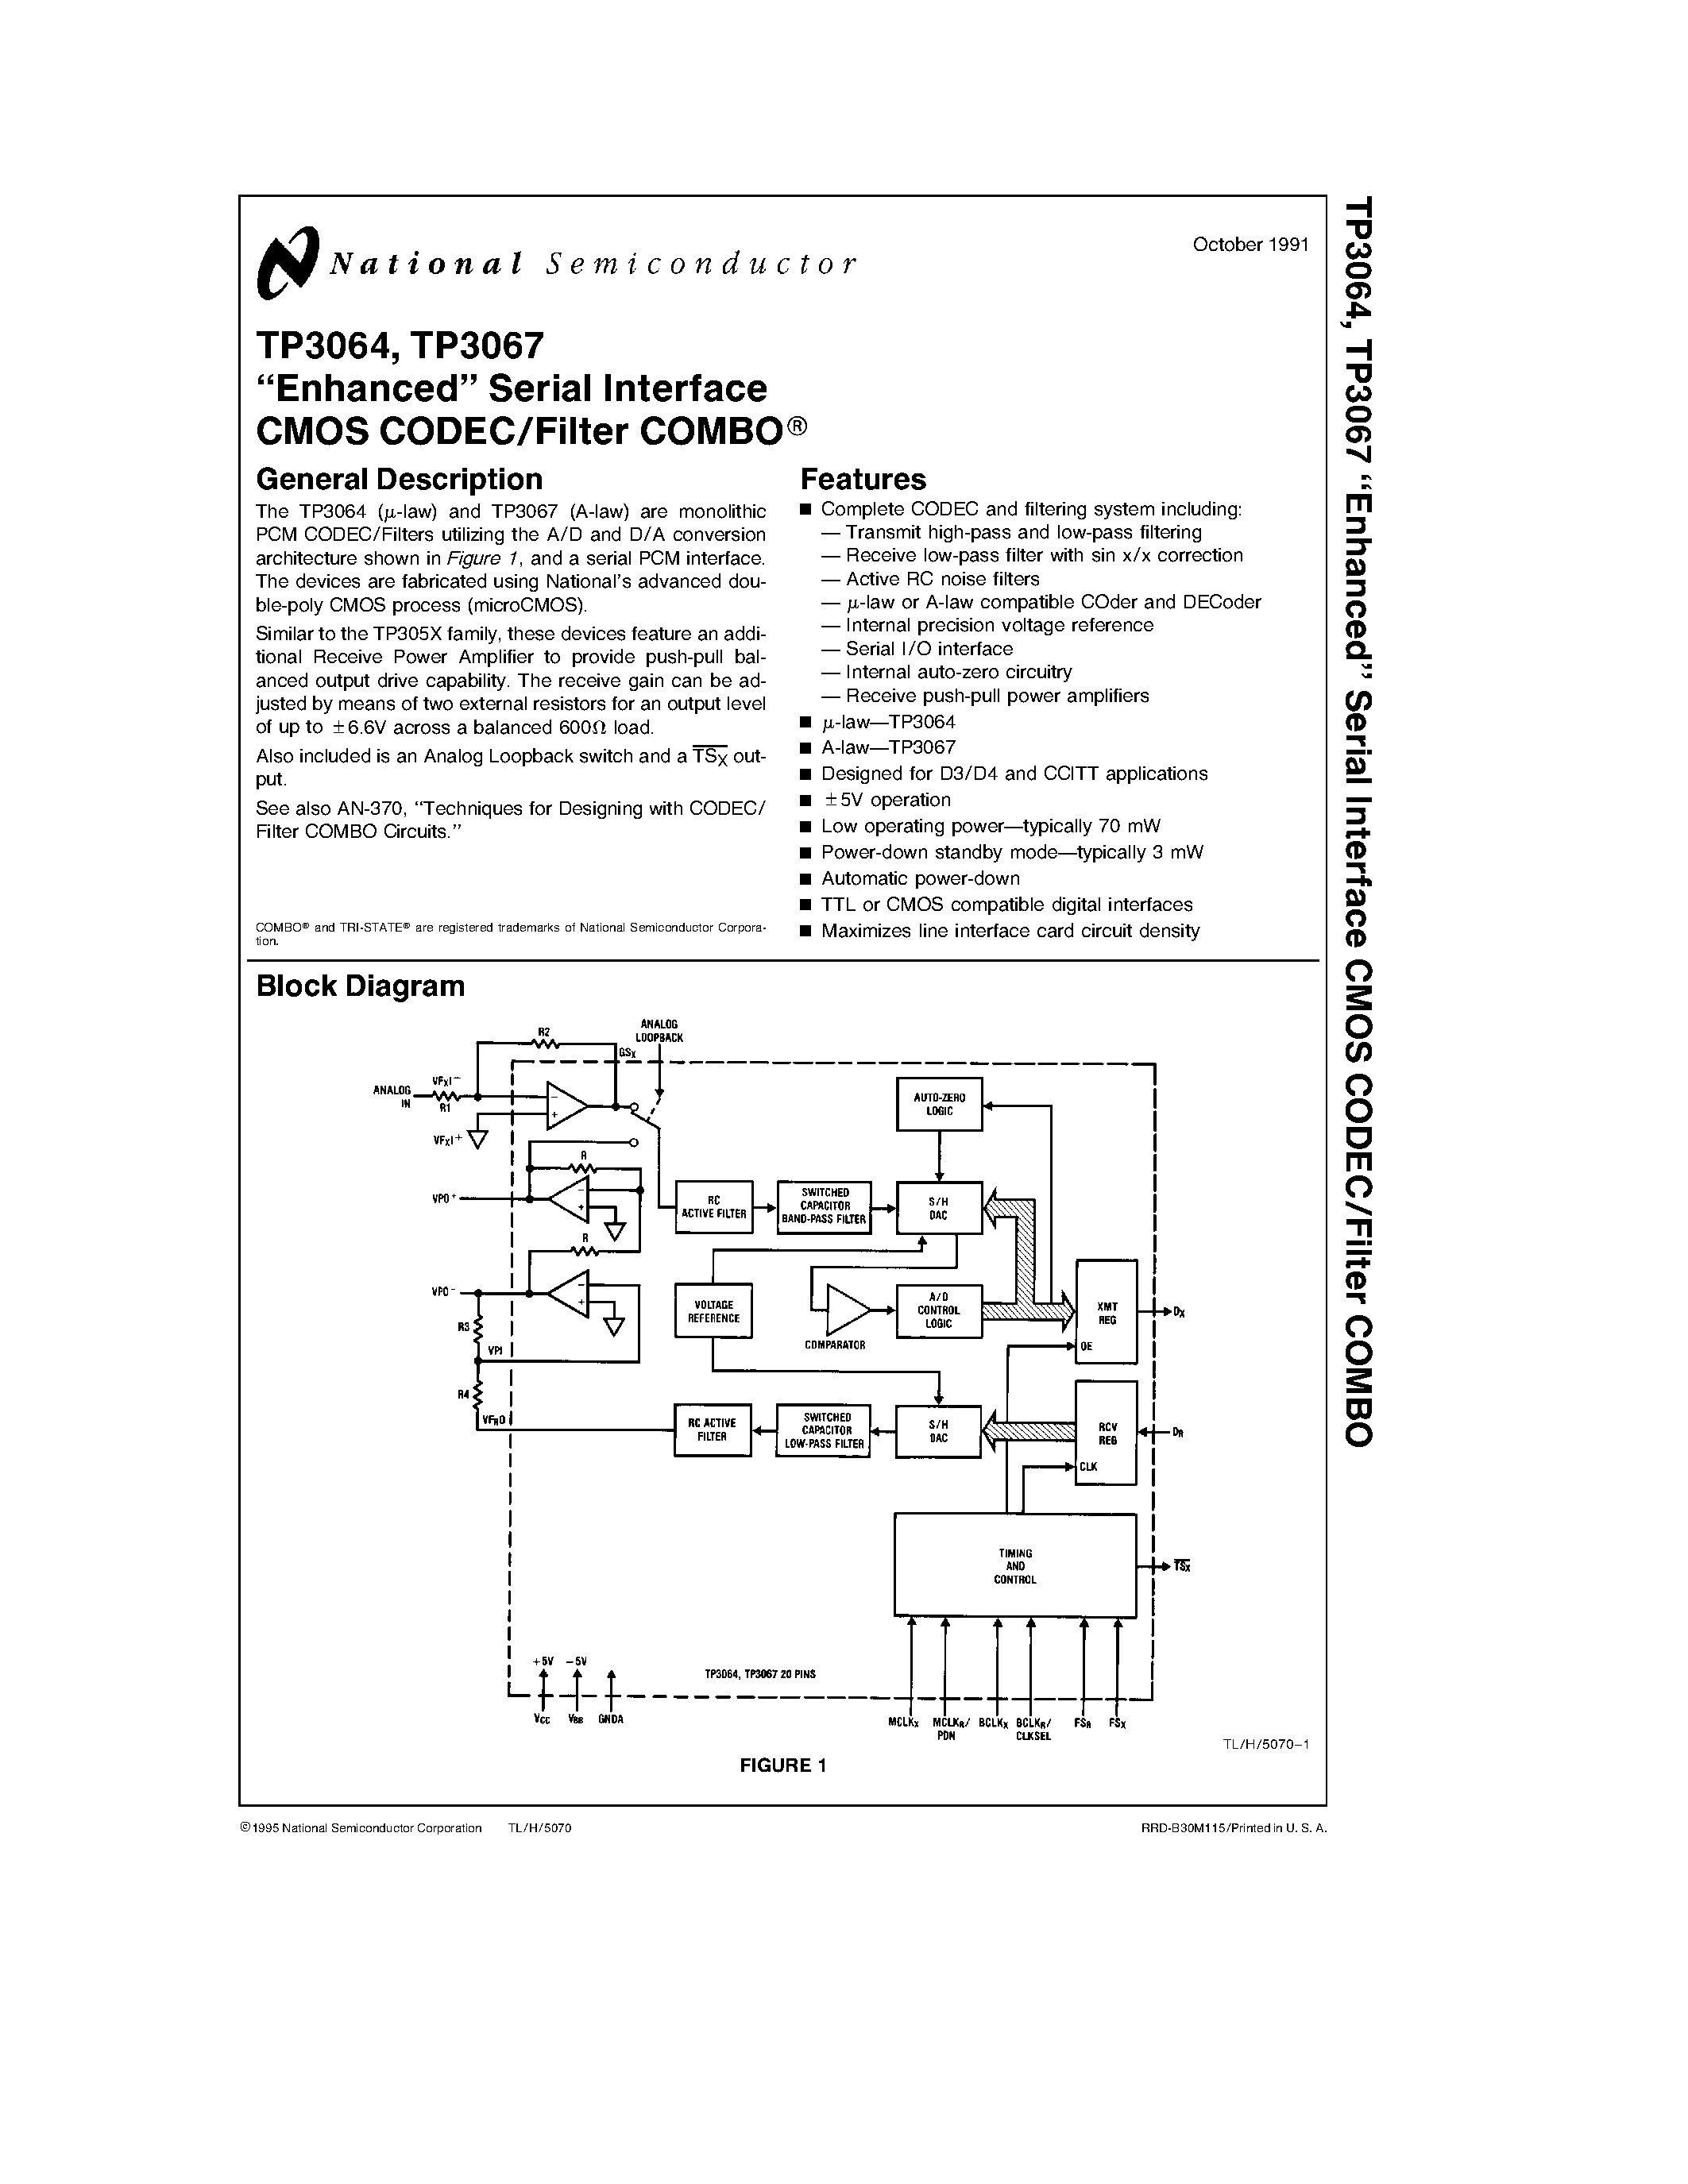 Даташит TP3067WM - Enhanced Serial Interface CMOS CODEC/Filter COMBO страница 1